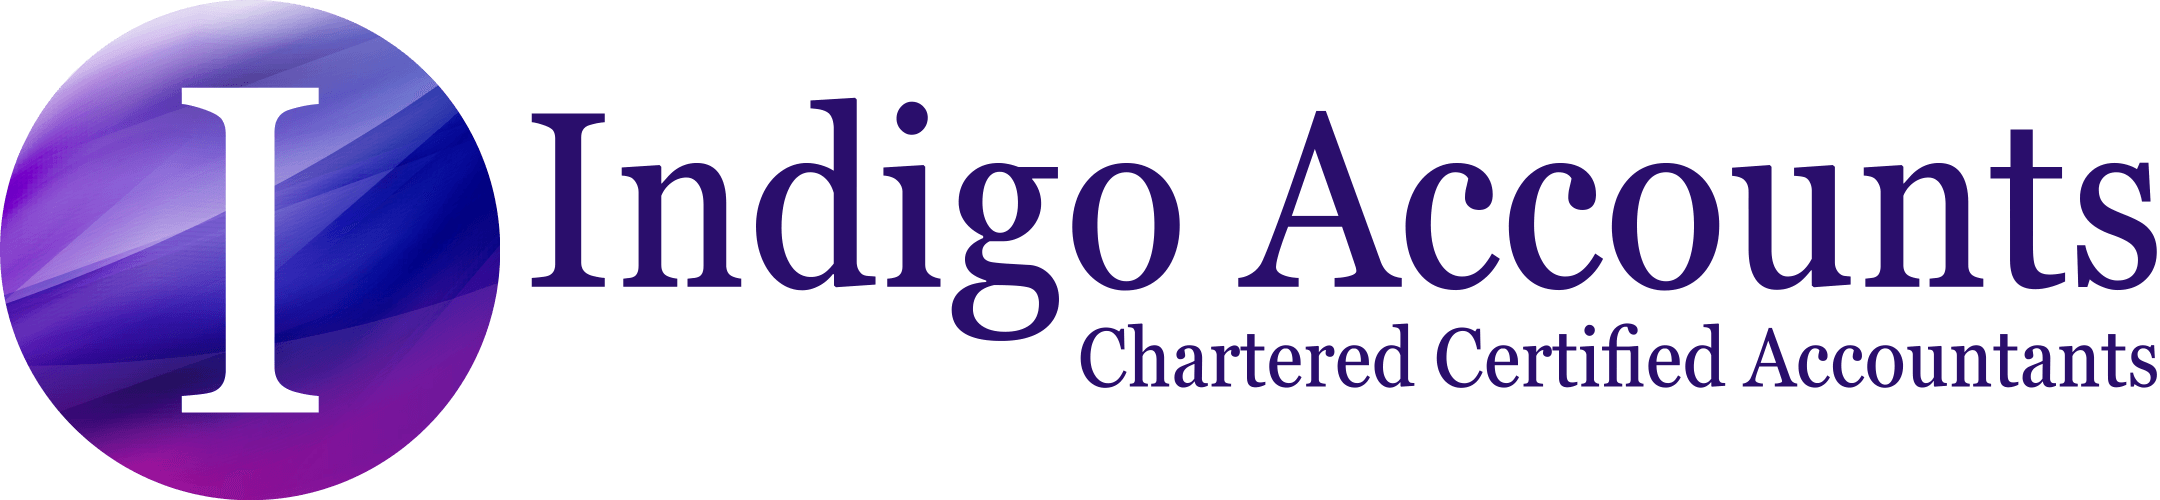 Indigo Accounts Chartered Certified Accountants Logo